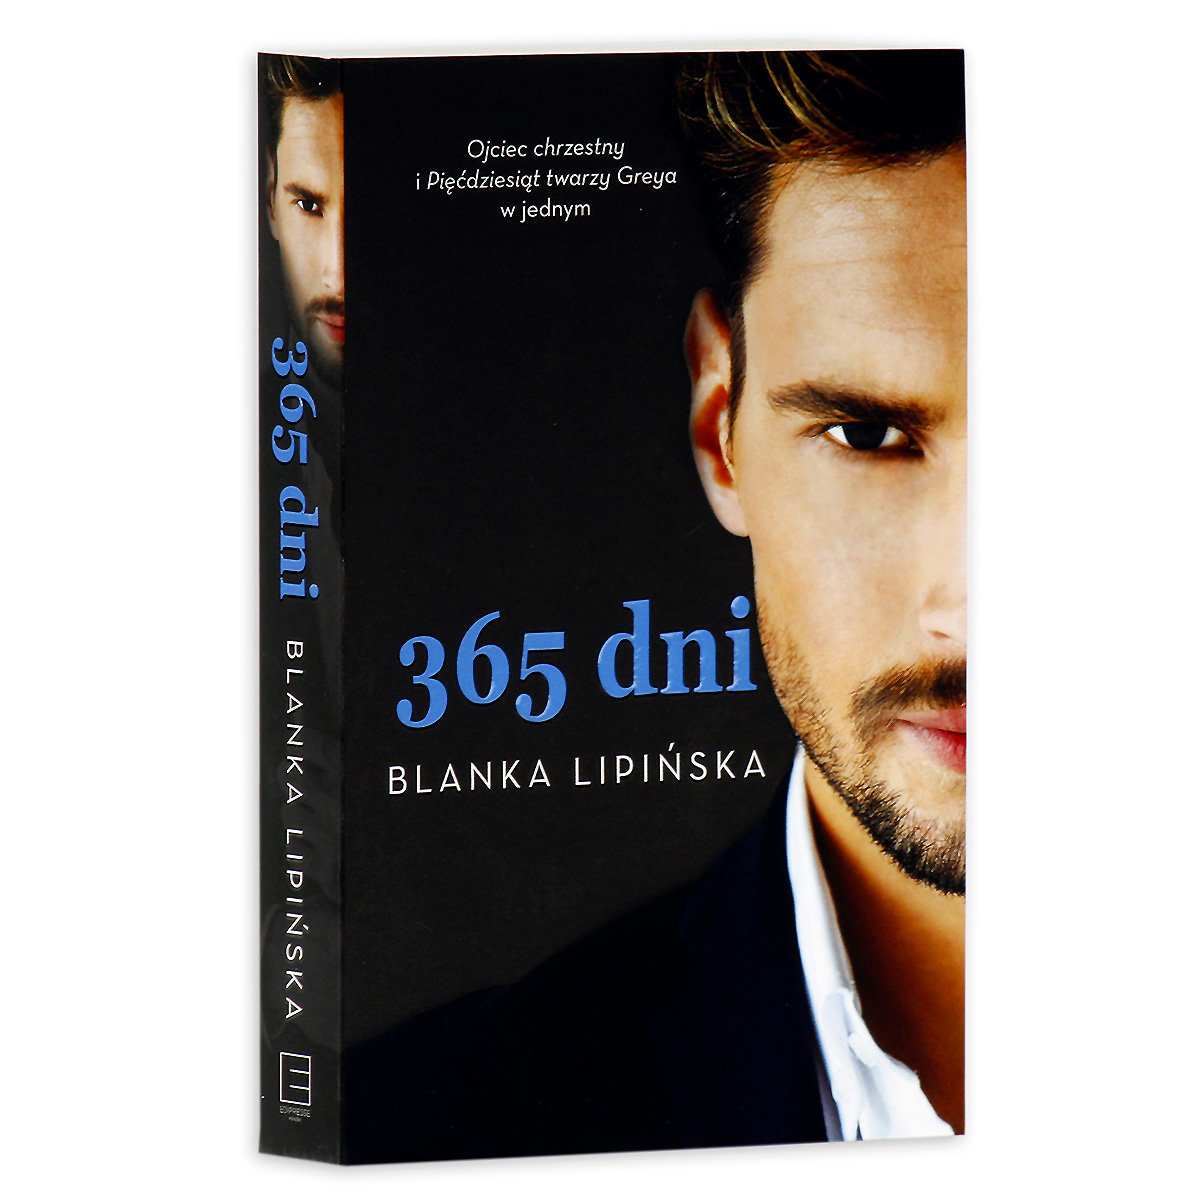 365 dni book english edition pdf free download